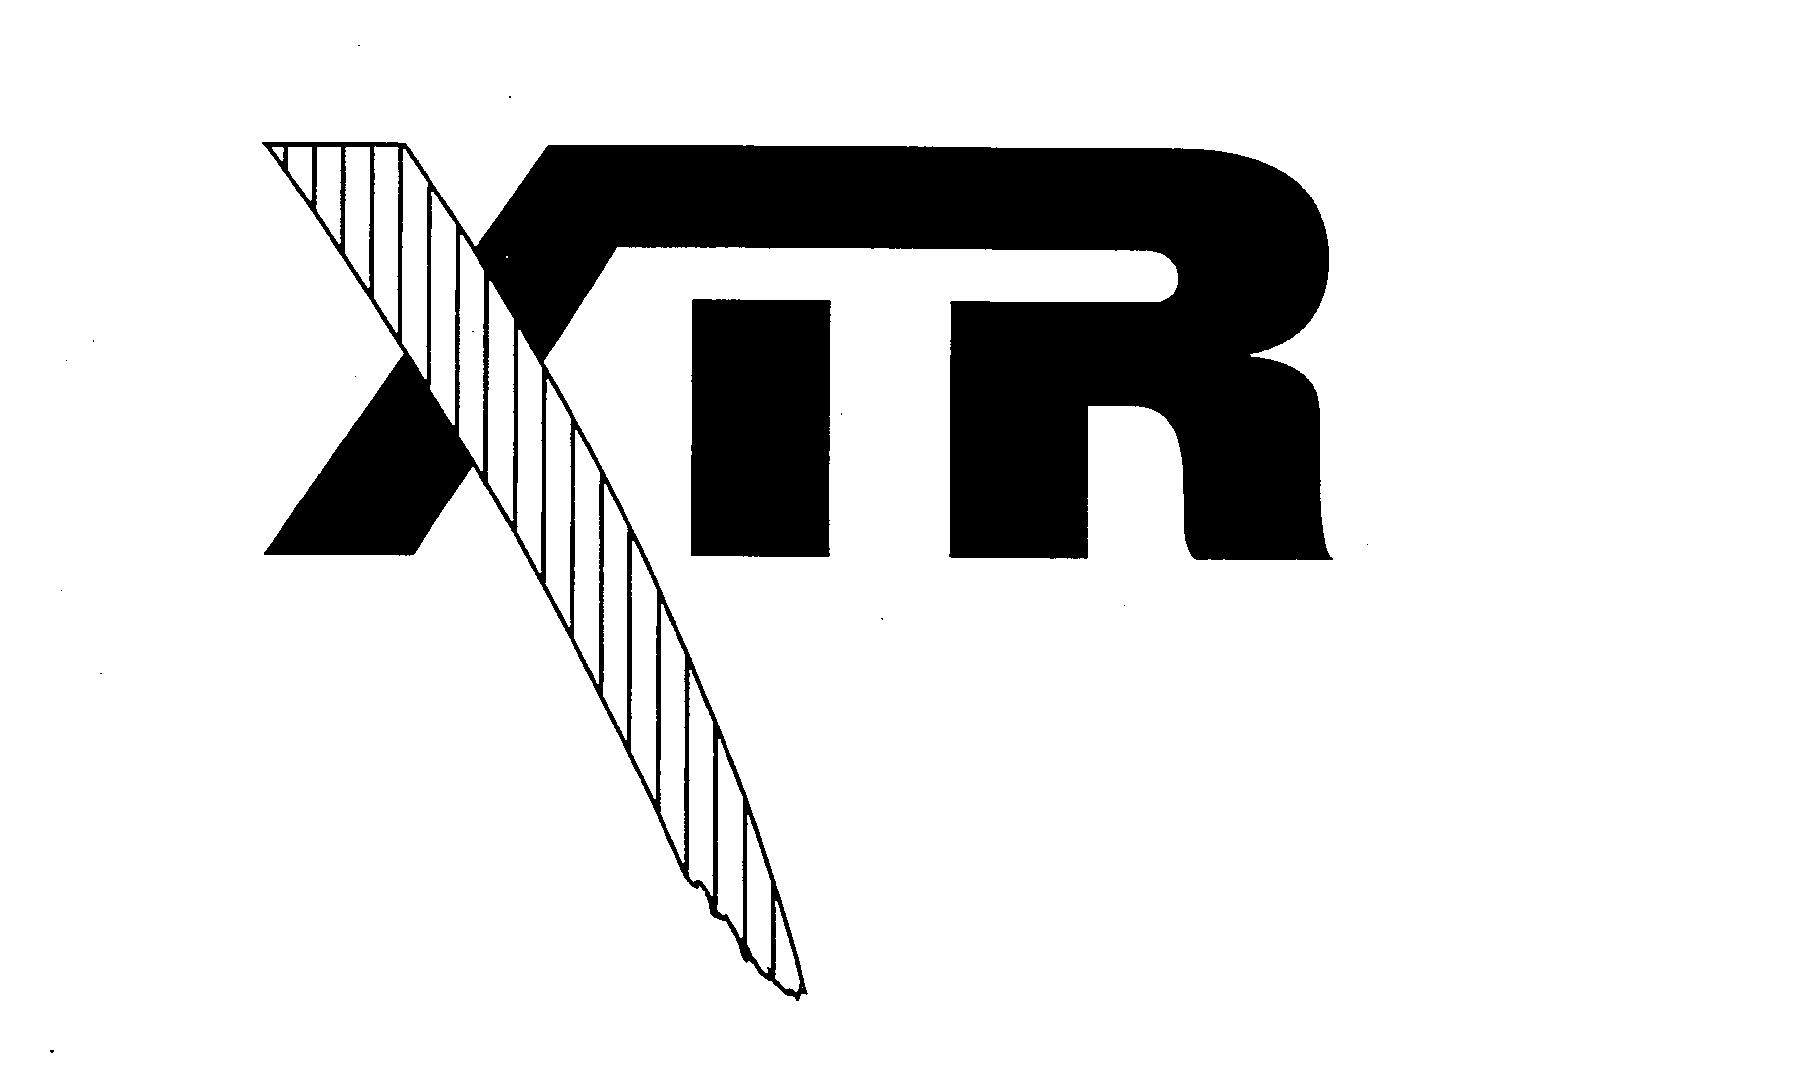 Trademark Logo XTR